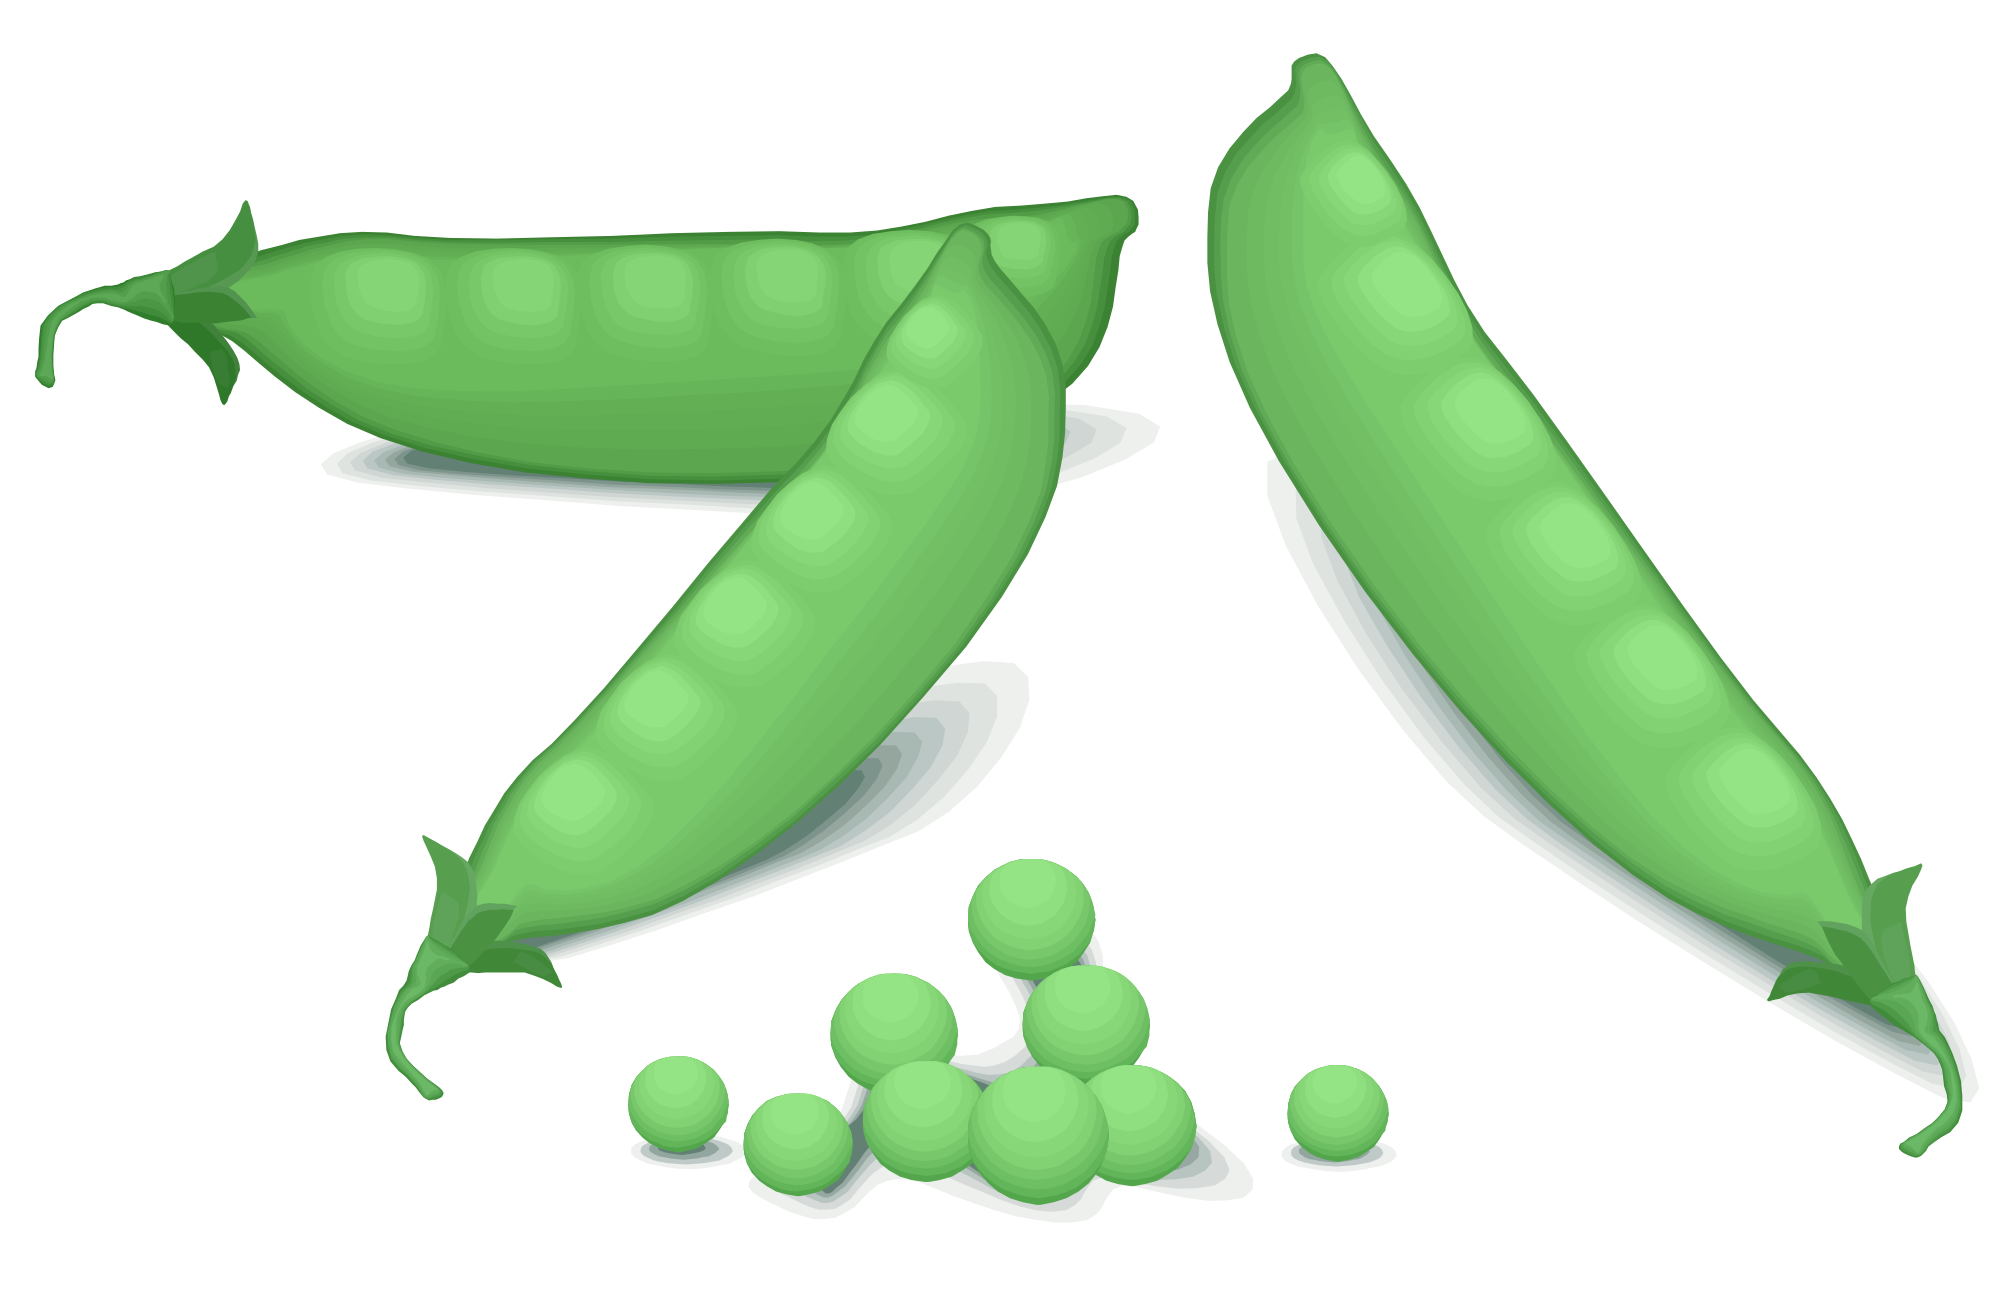 Peas clipart green pea. File svg wikimedia commons